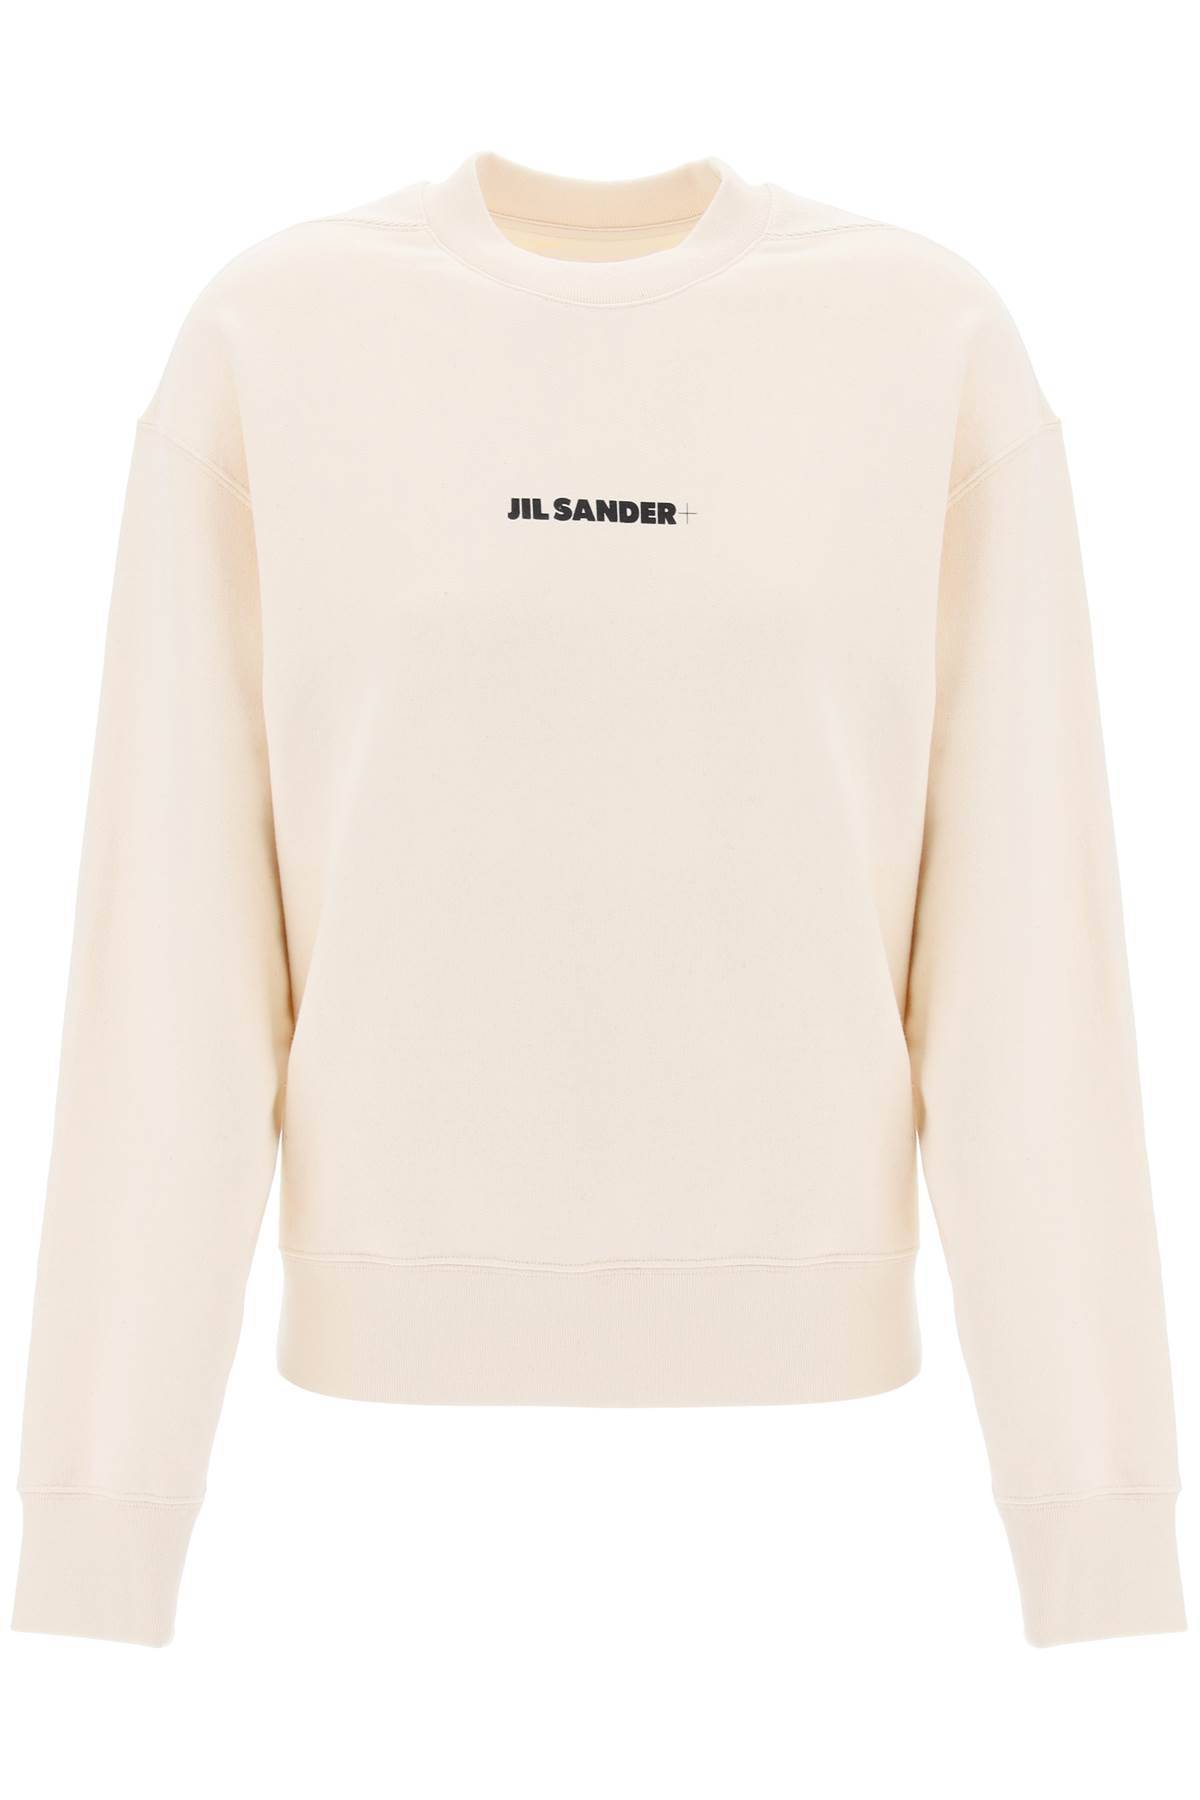 Jil Sander JIL SANDER crew-neck sweatshirt with logo print